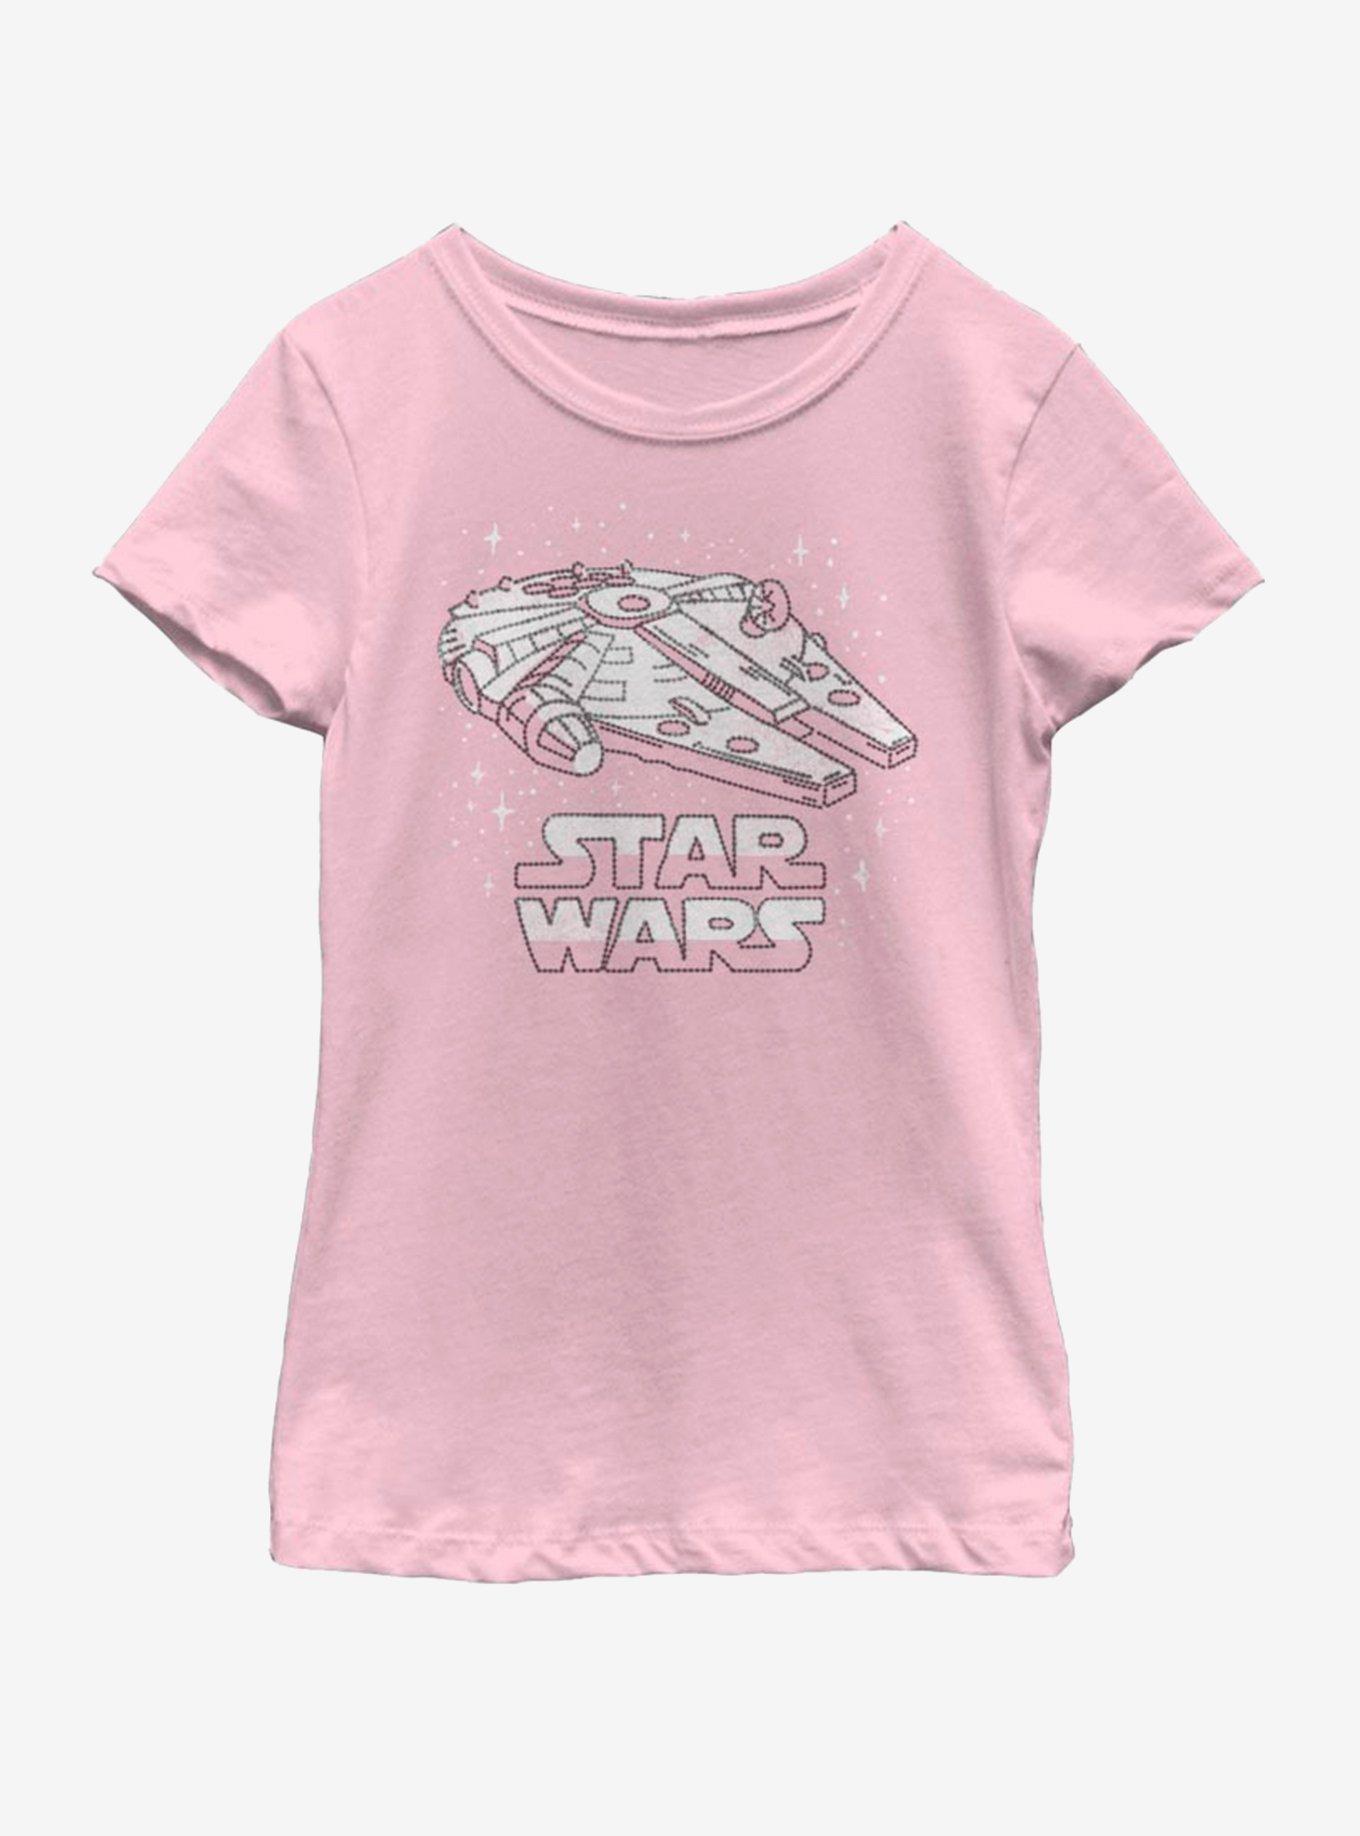 Star Wars Vintage Wars Youth Girls T-Shirt, PINK, hi-res